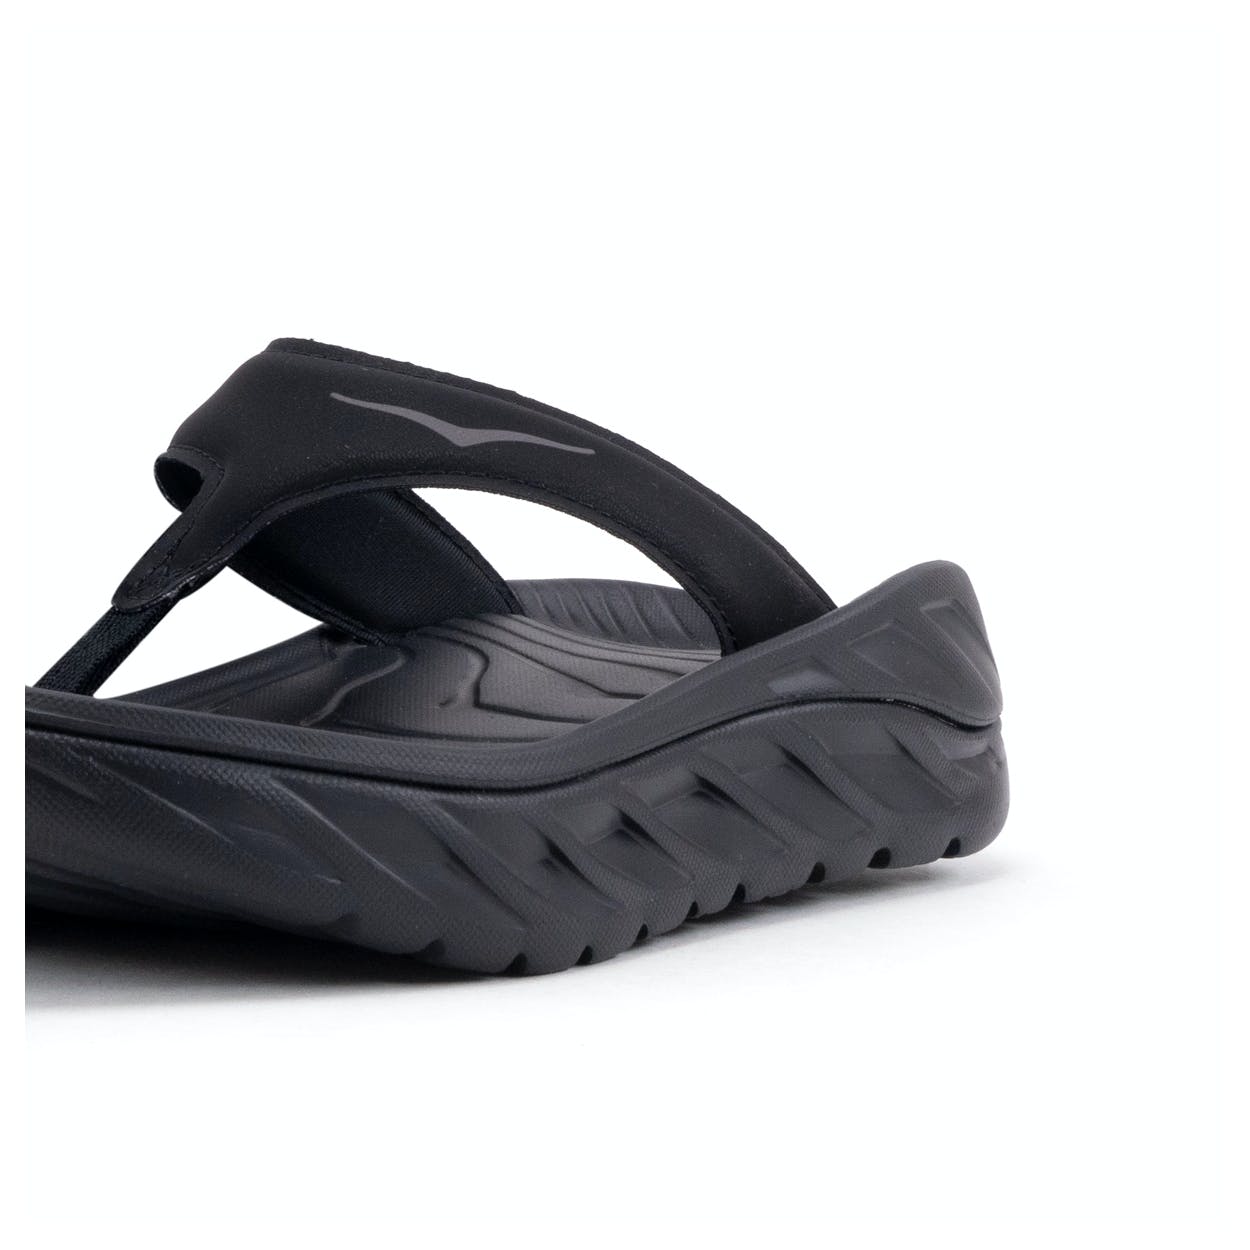 Hoka Ora Recovery Women's Flip Sandal -- Black / Dark Gull Gray - Size 6